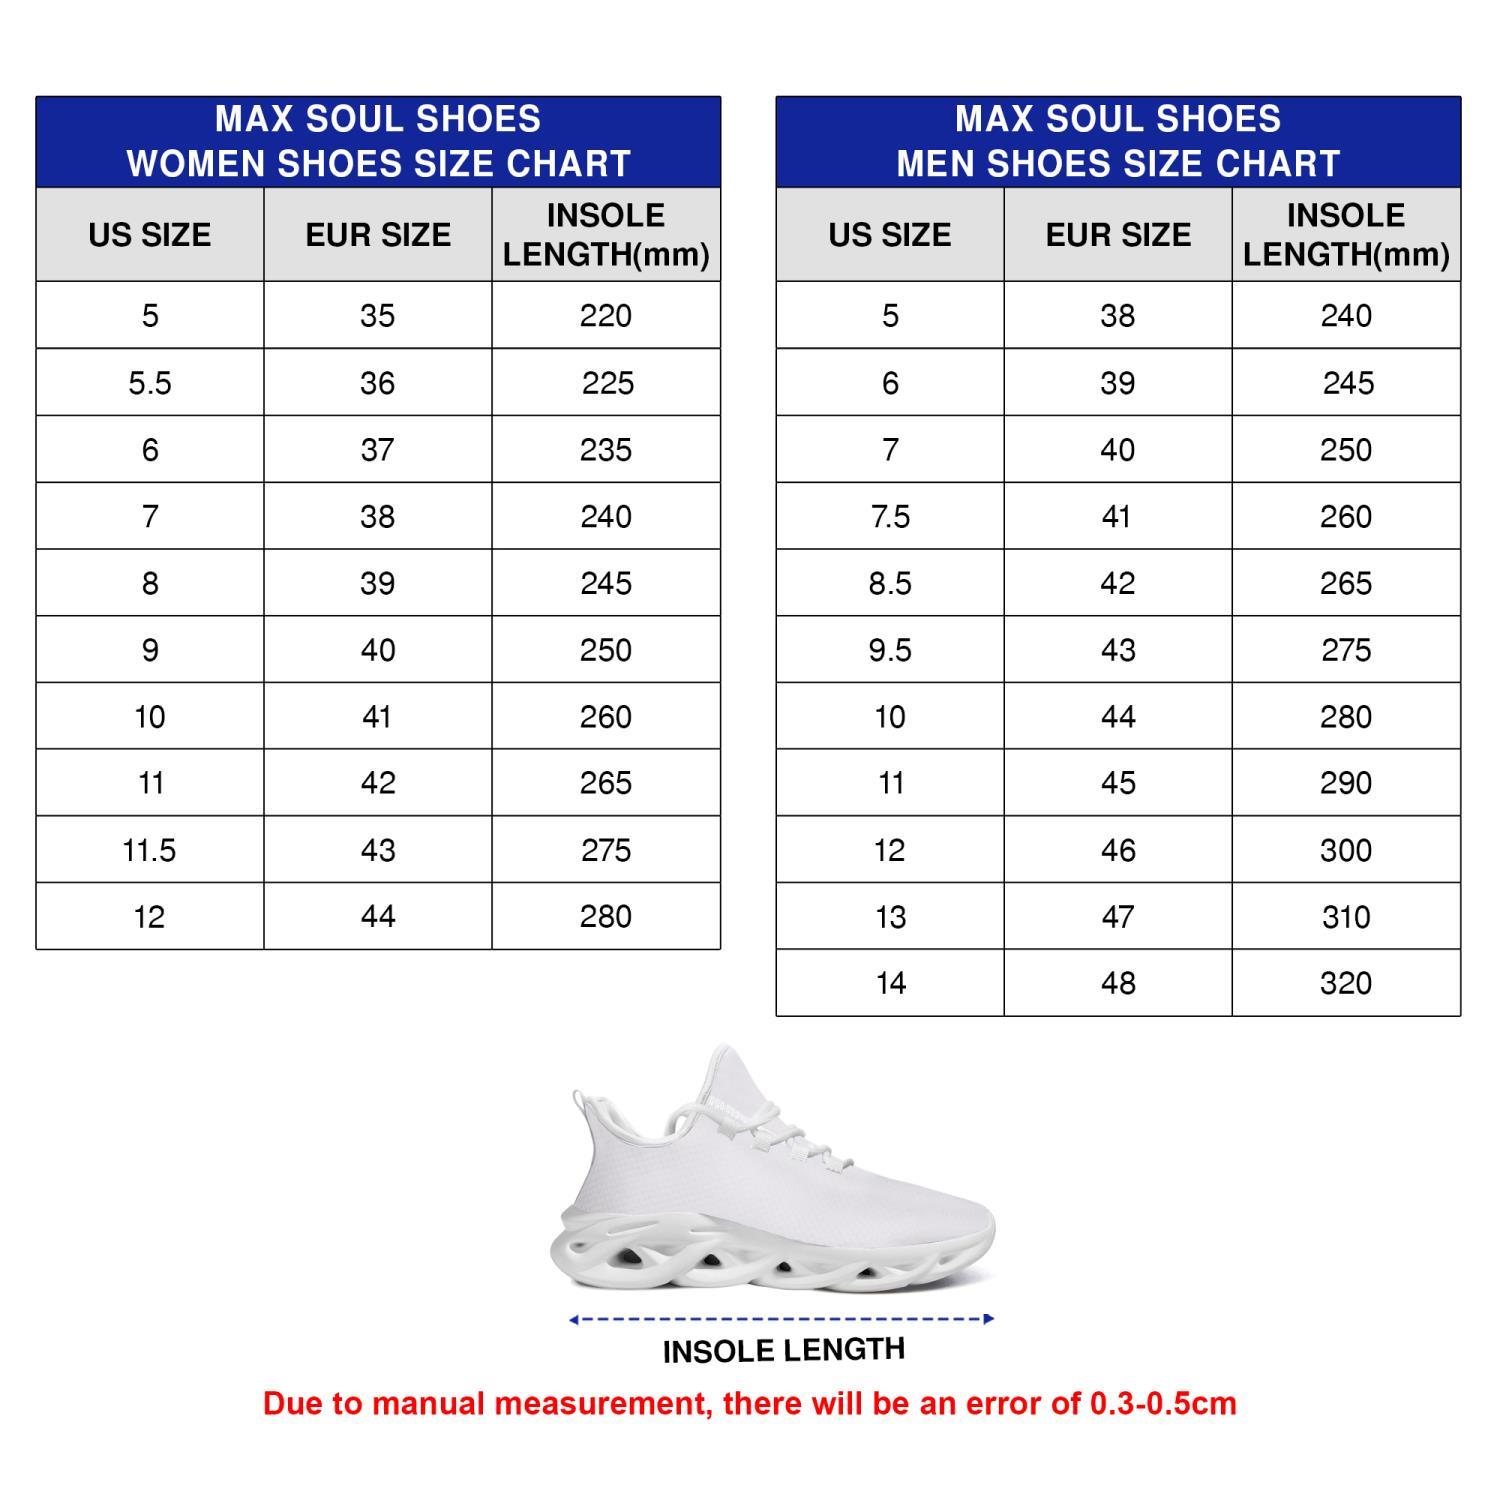 size chart - max soul shoes